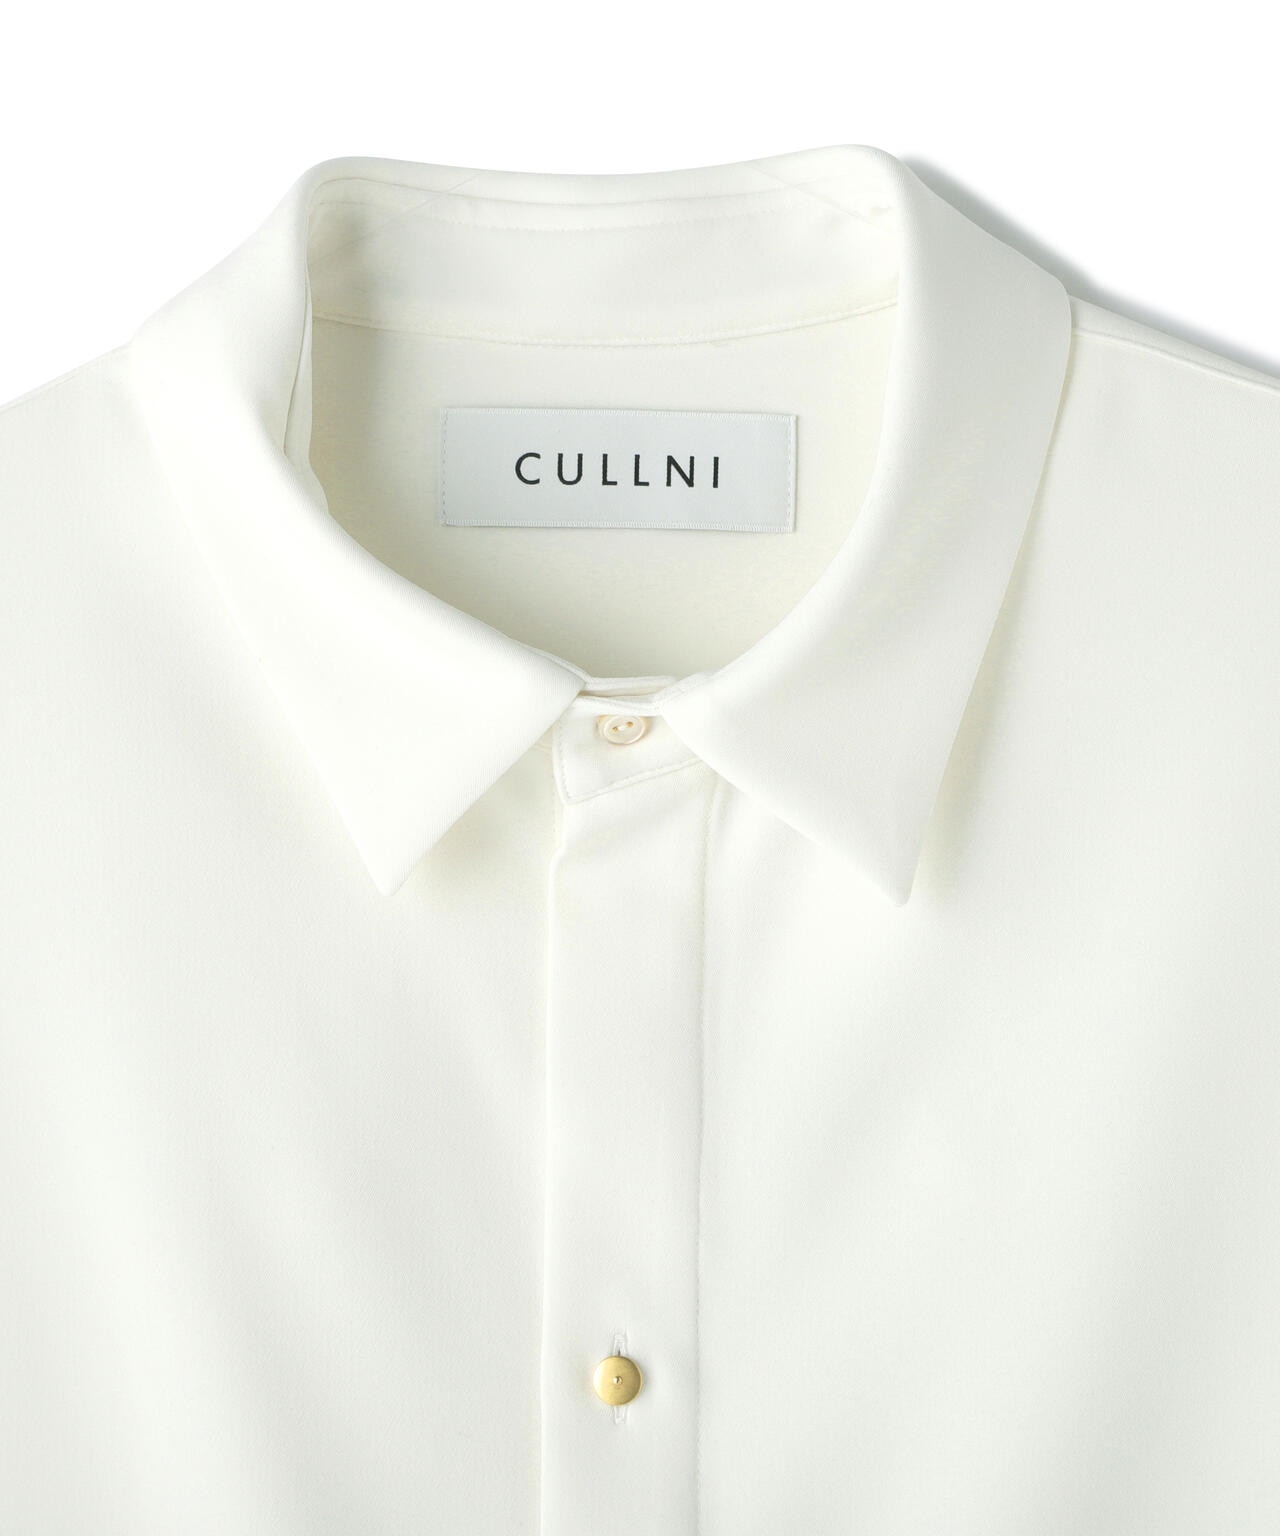 CULLNI/クルニ/Double Short Sleeve Shirt/ダブルショートスリーブ